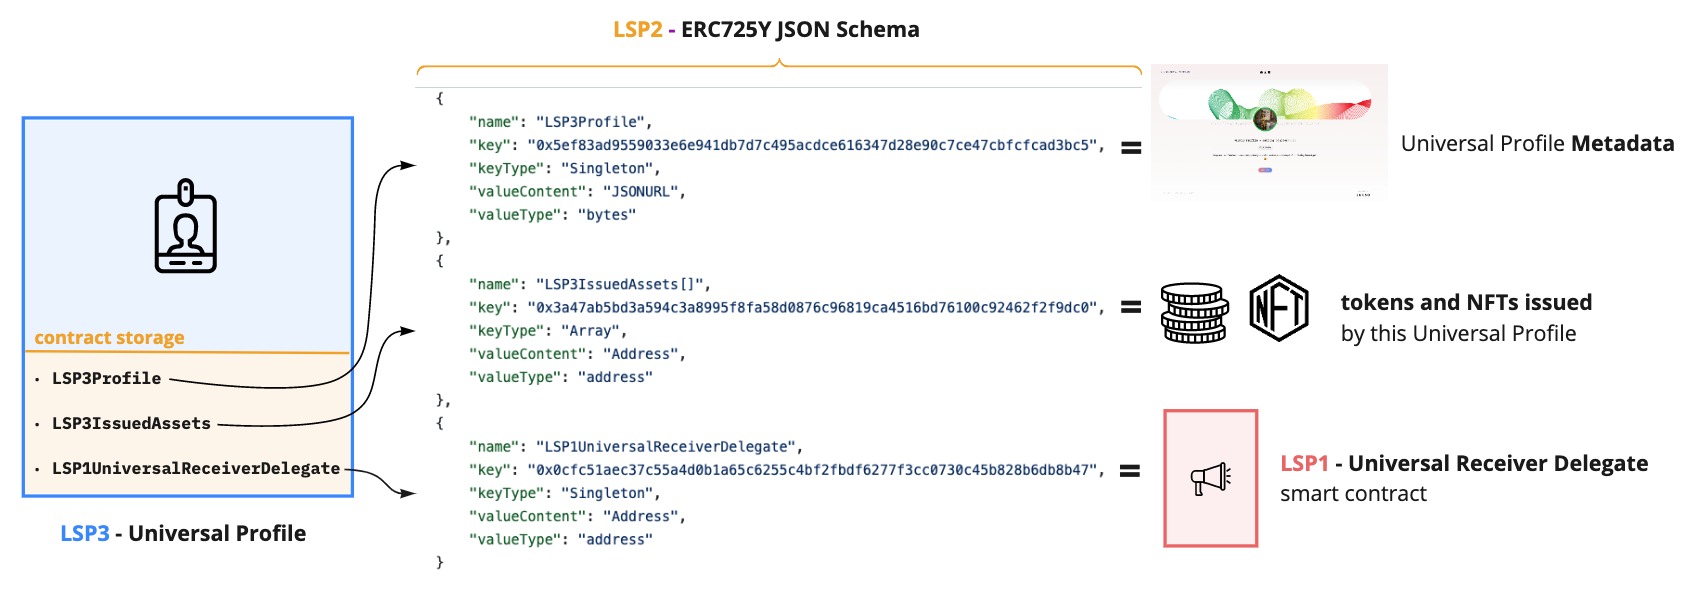 Universal Profile + ERC725Y JSON schema (diagram)